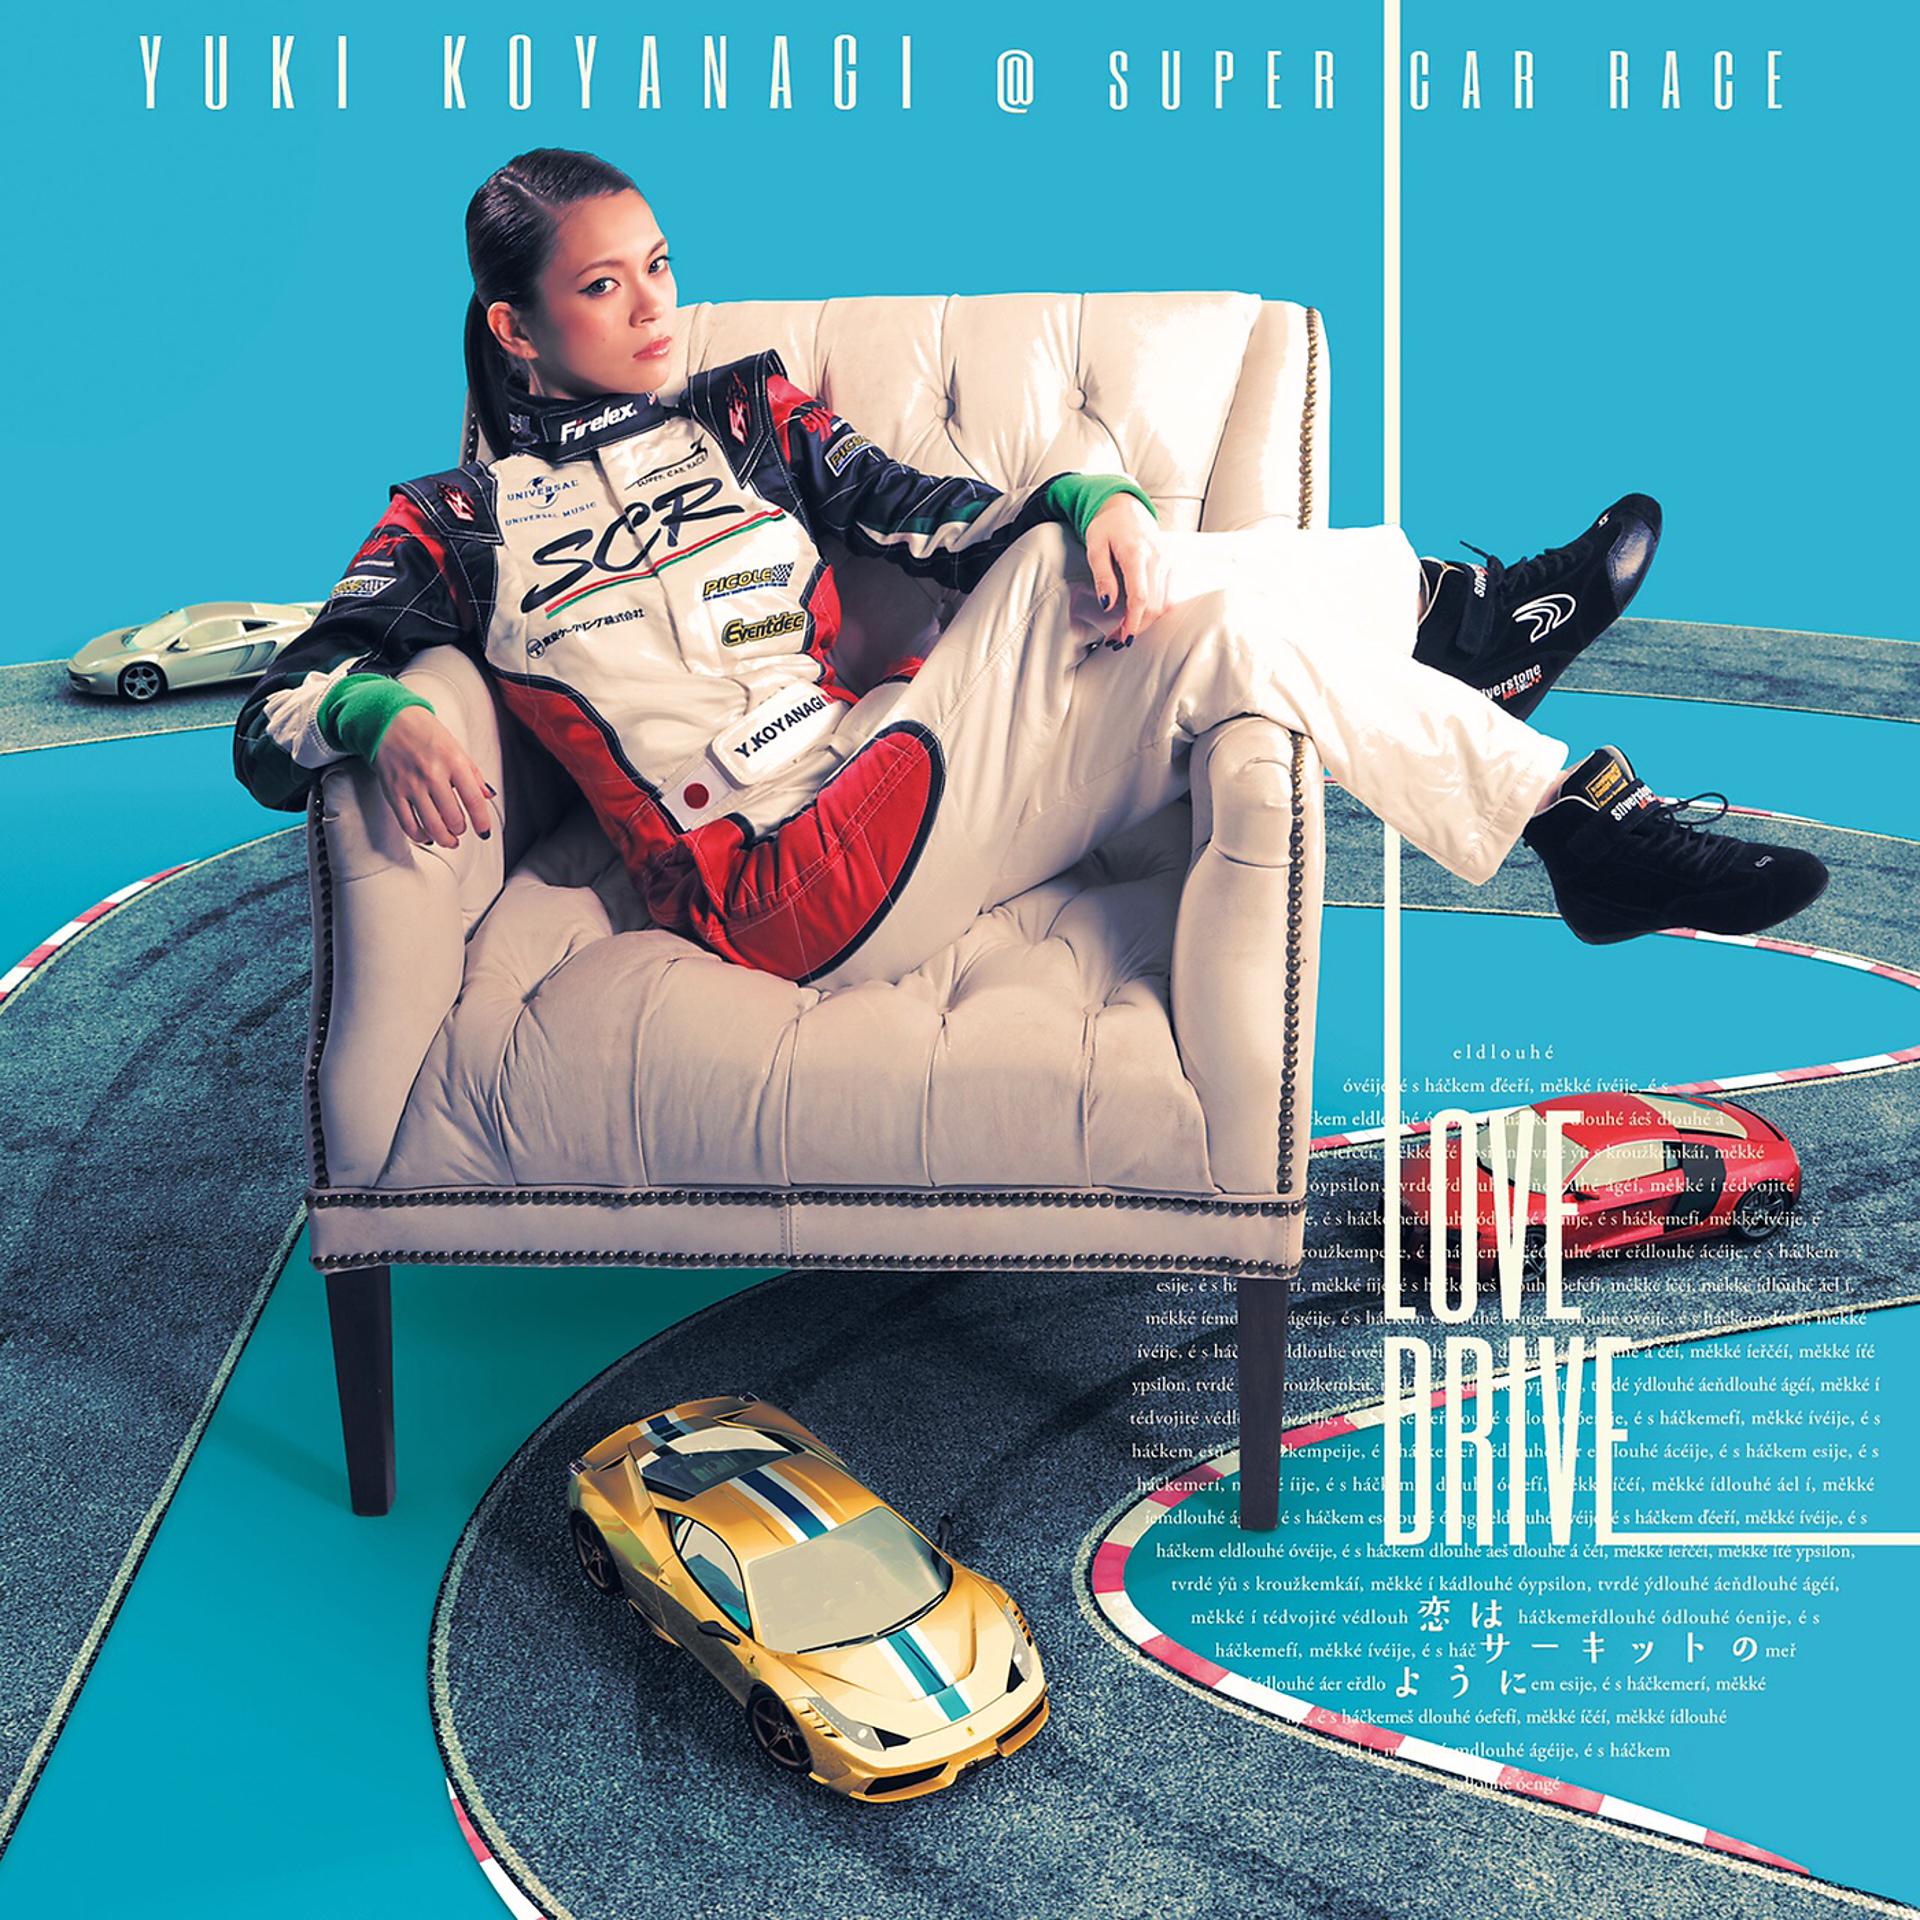 Постер альбома Love Drive